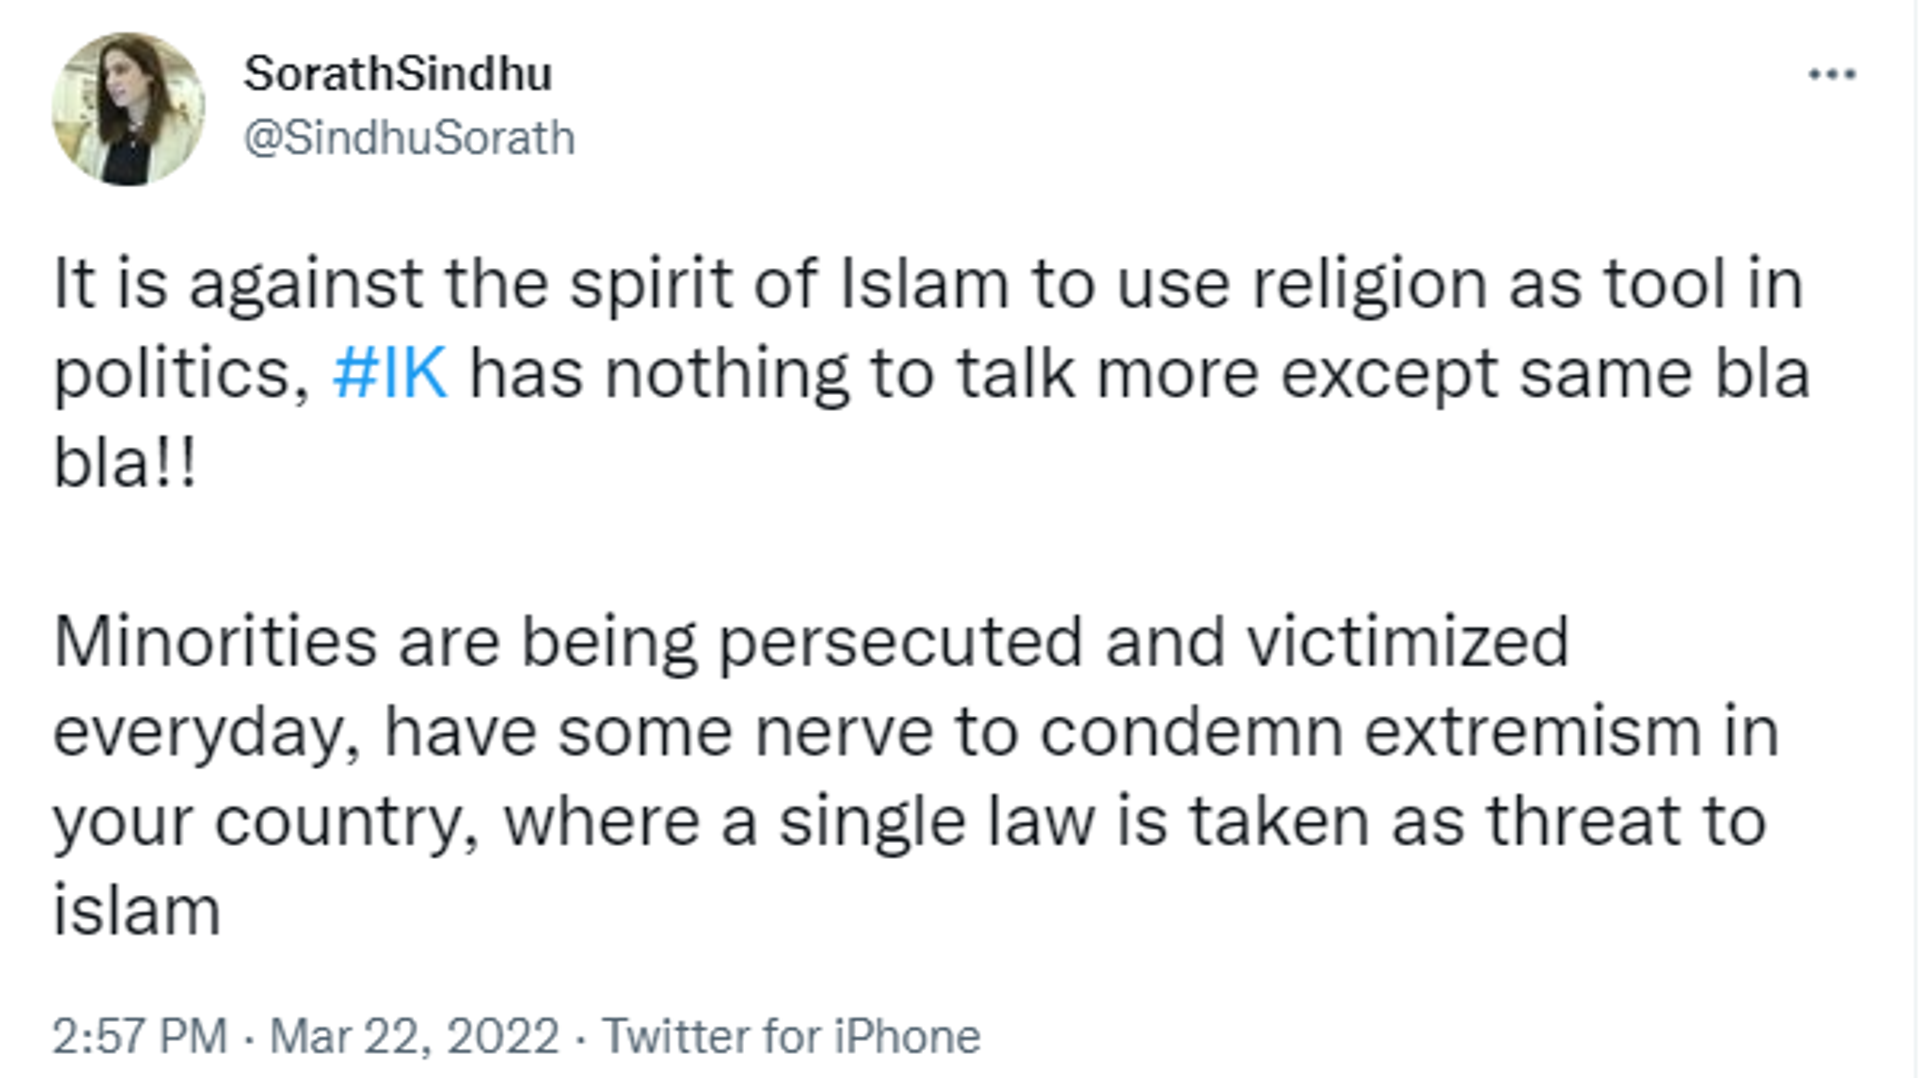 Twitter User from Pakistan Condoles Killing of Hindu Girl - Sputnik International, 1920, 22.03.2022